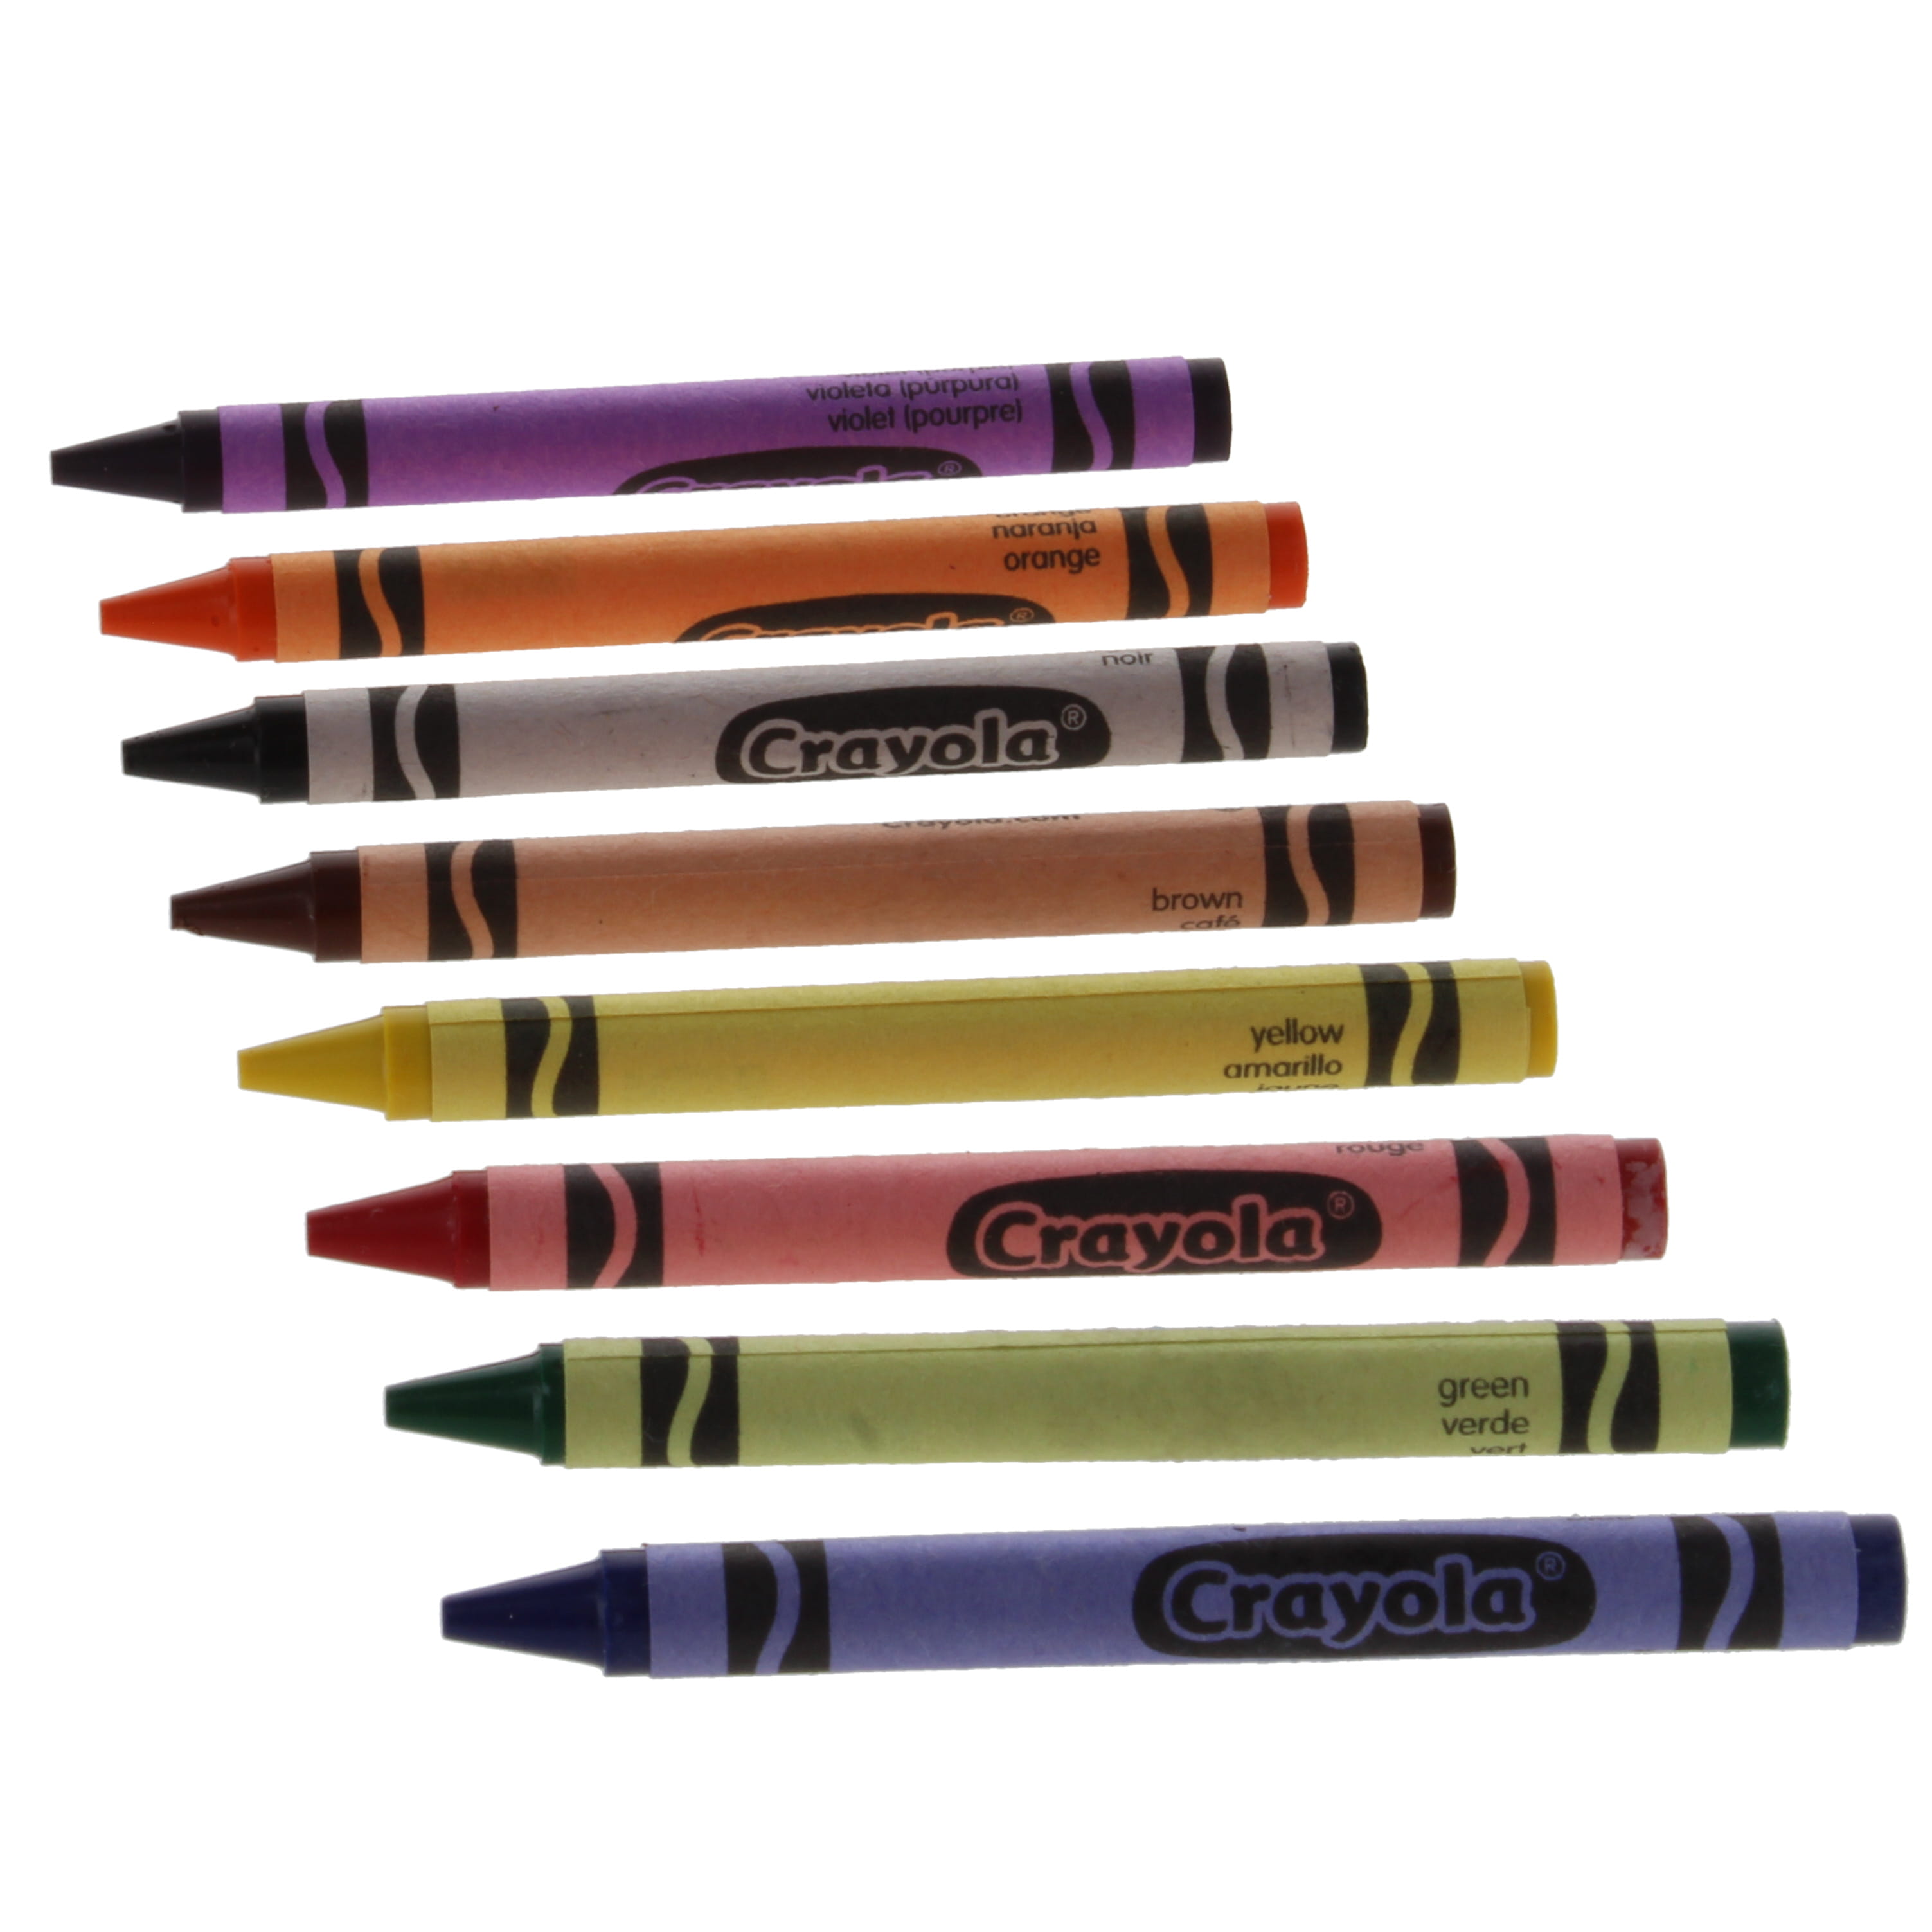 Crayola Wax Crayons Standard Assortment - pack of 8